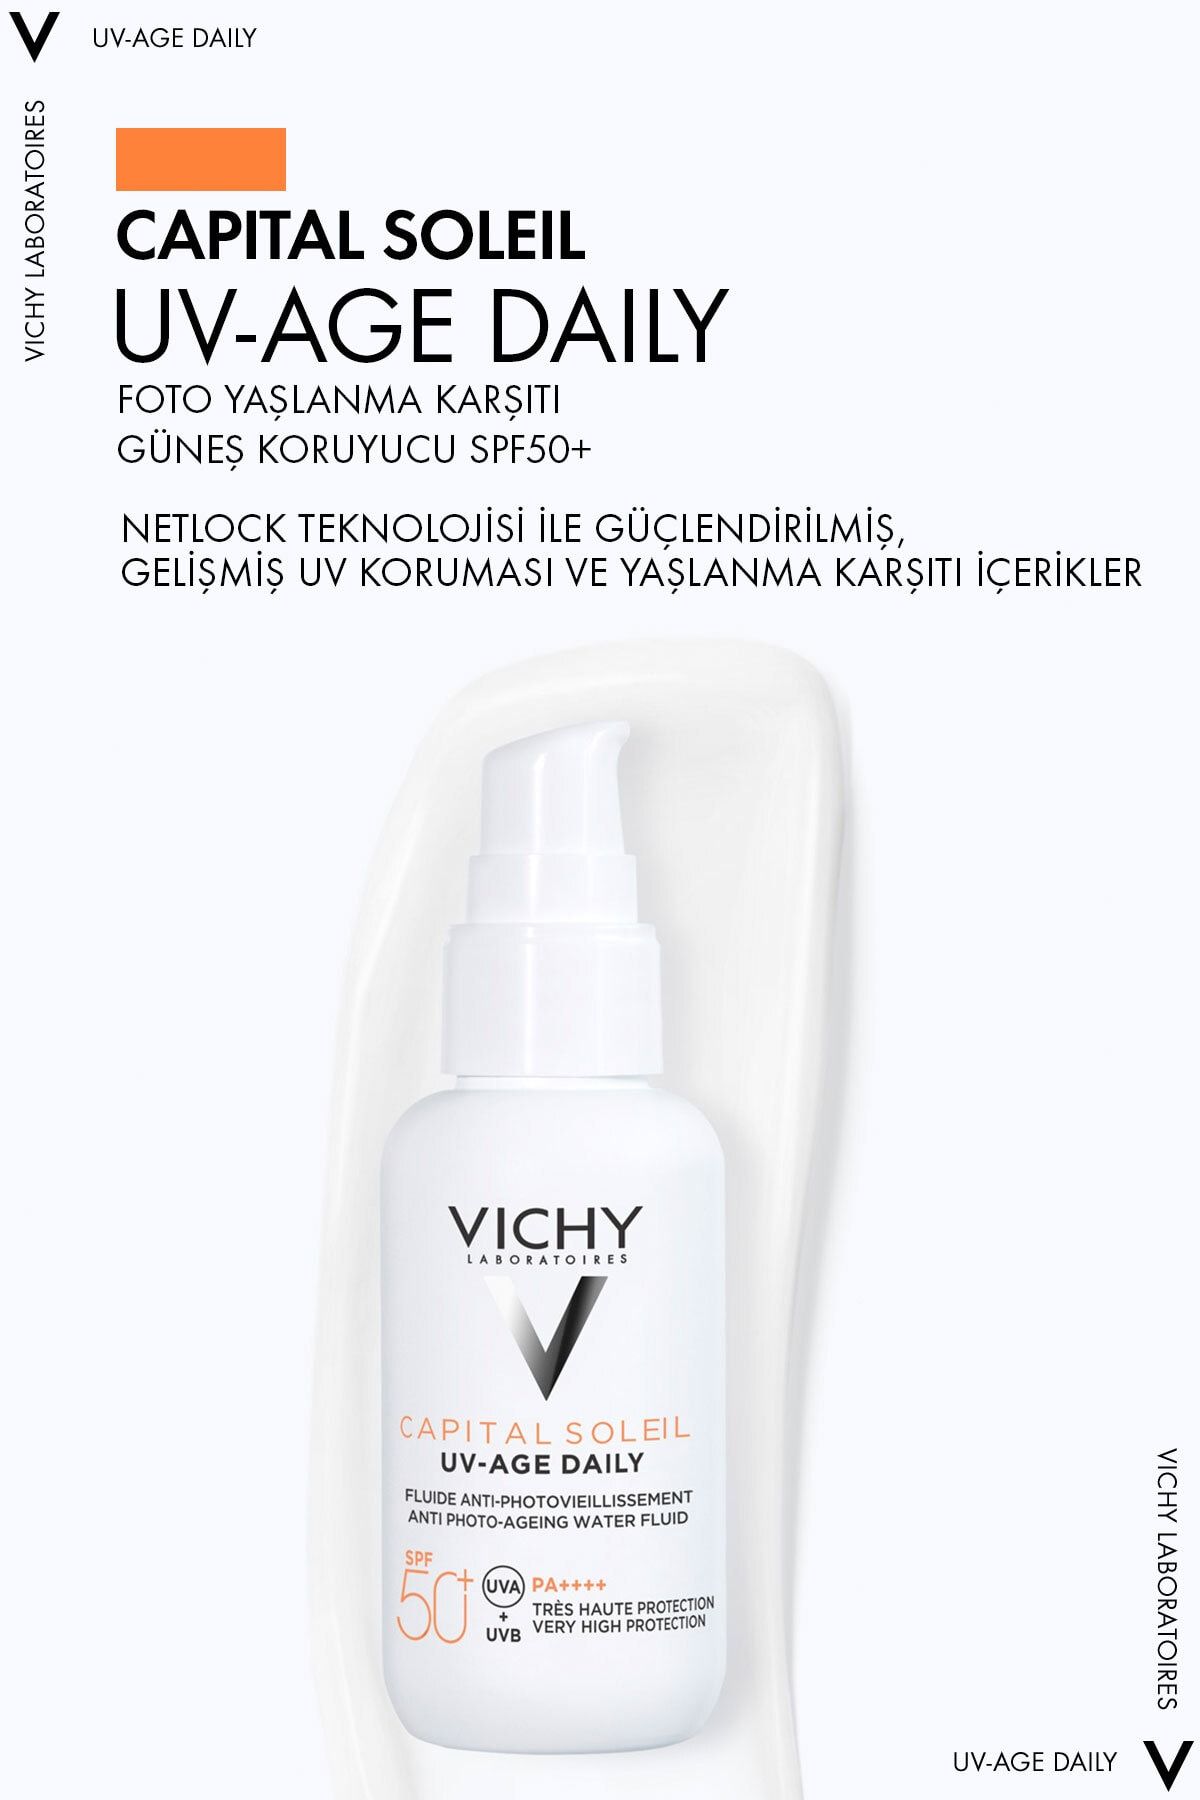 Vichy uv age daily